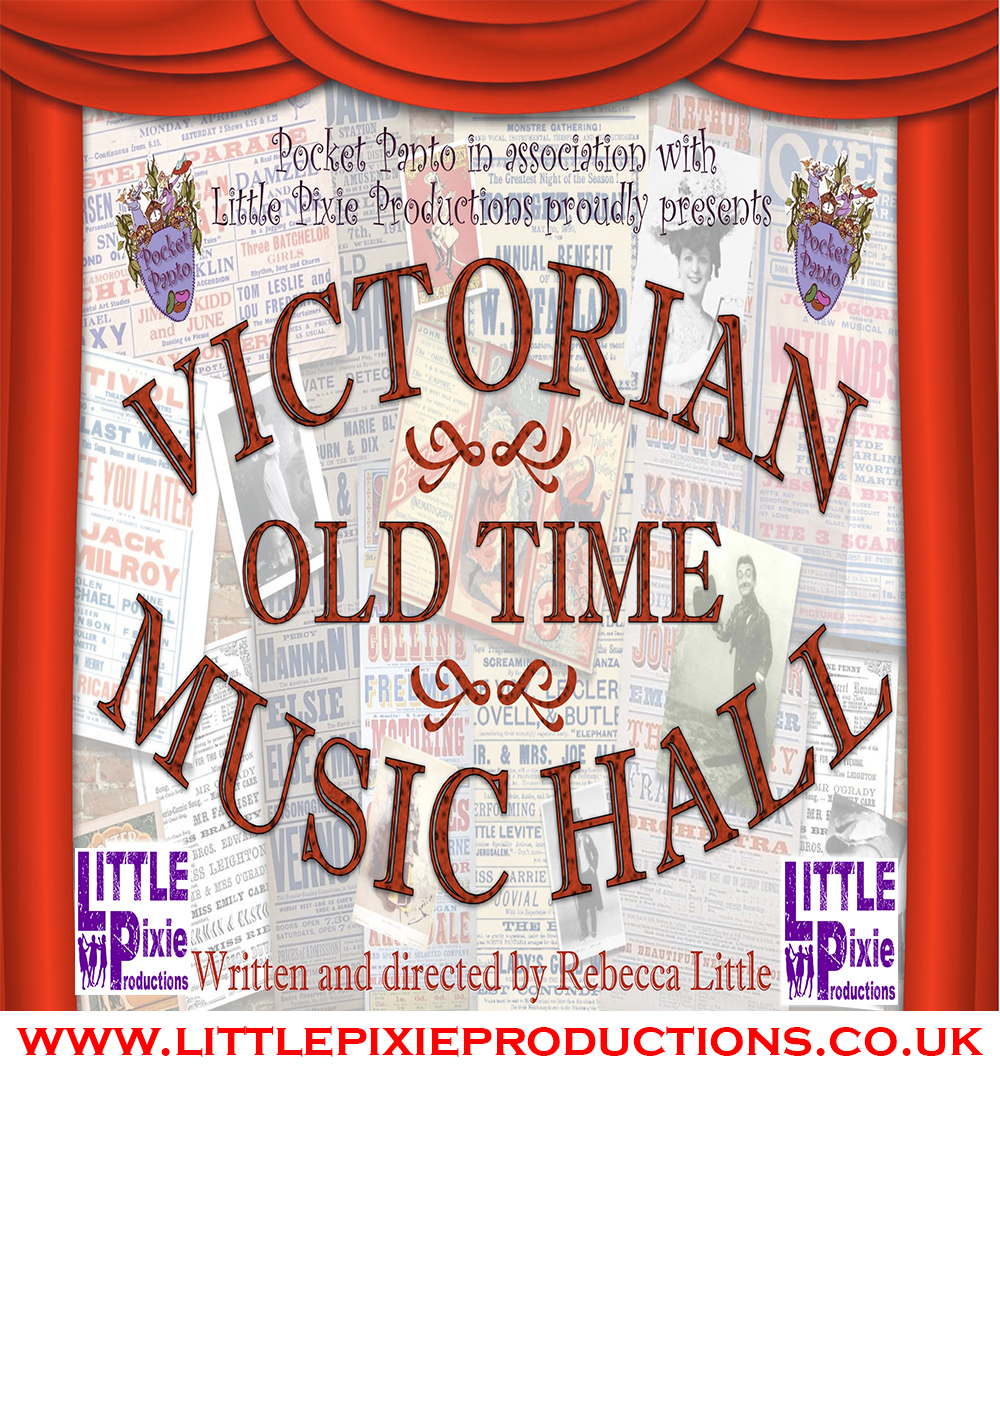 Victorian Music Hall